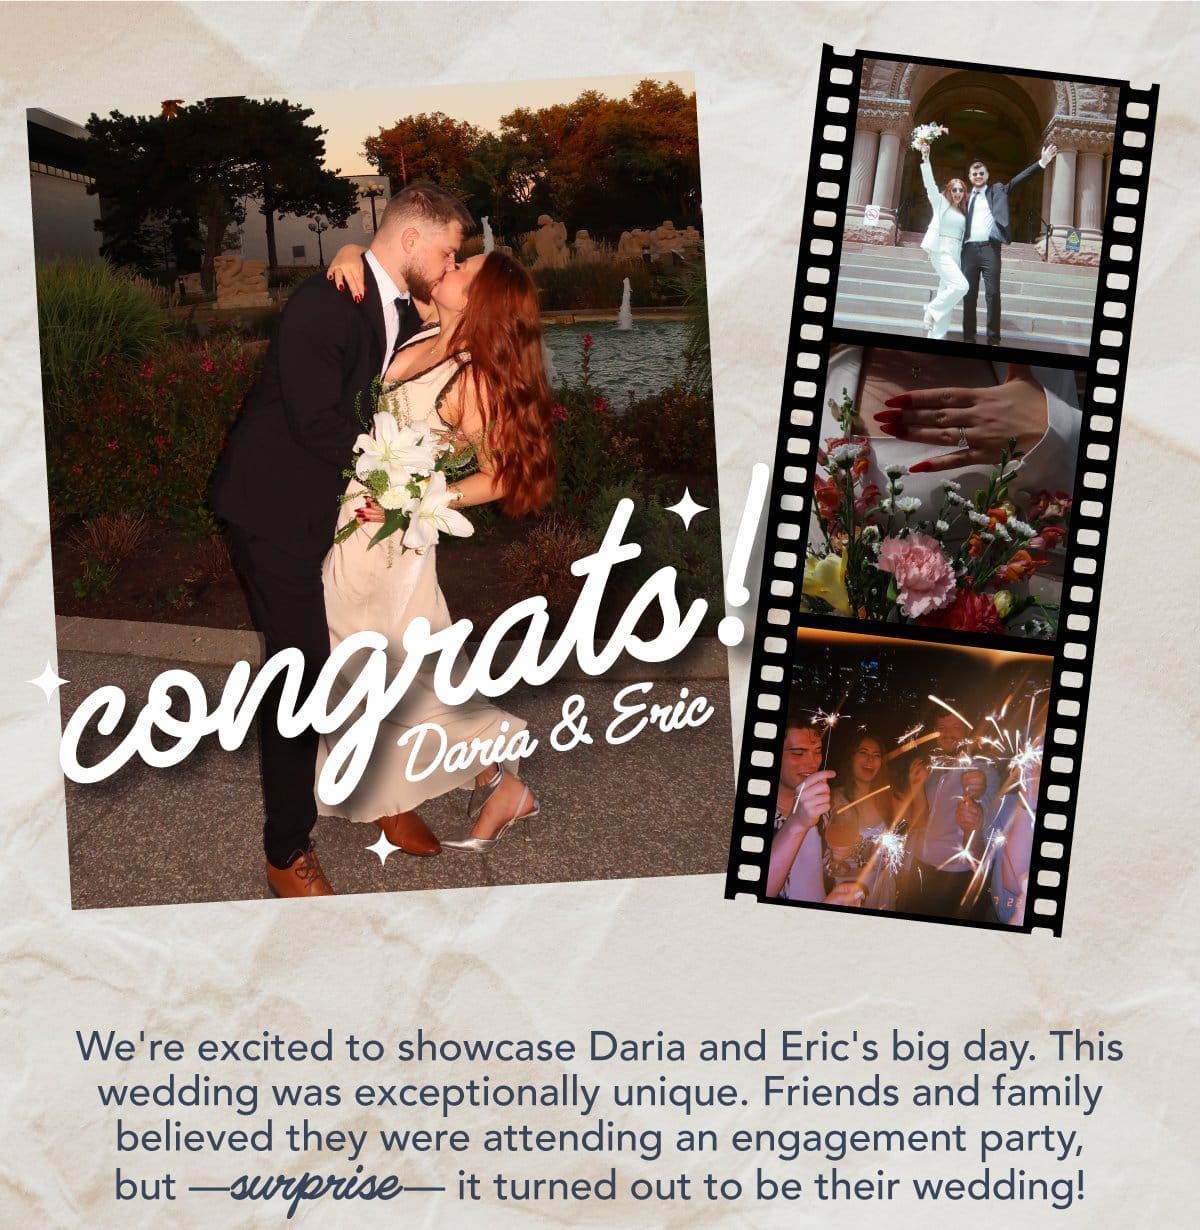 Congrats! Daria & Eric